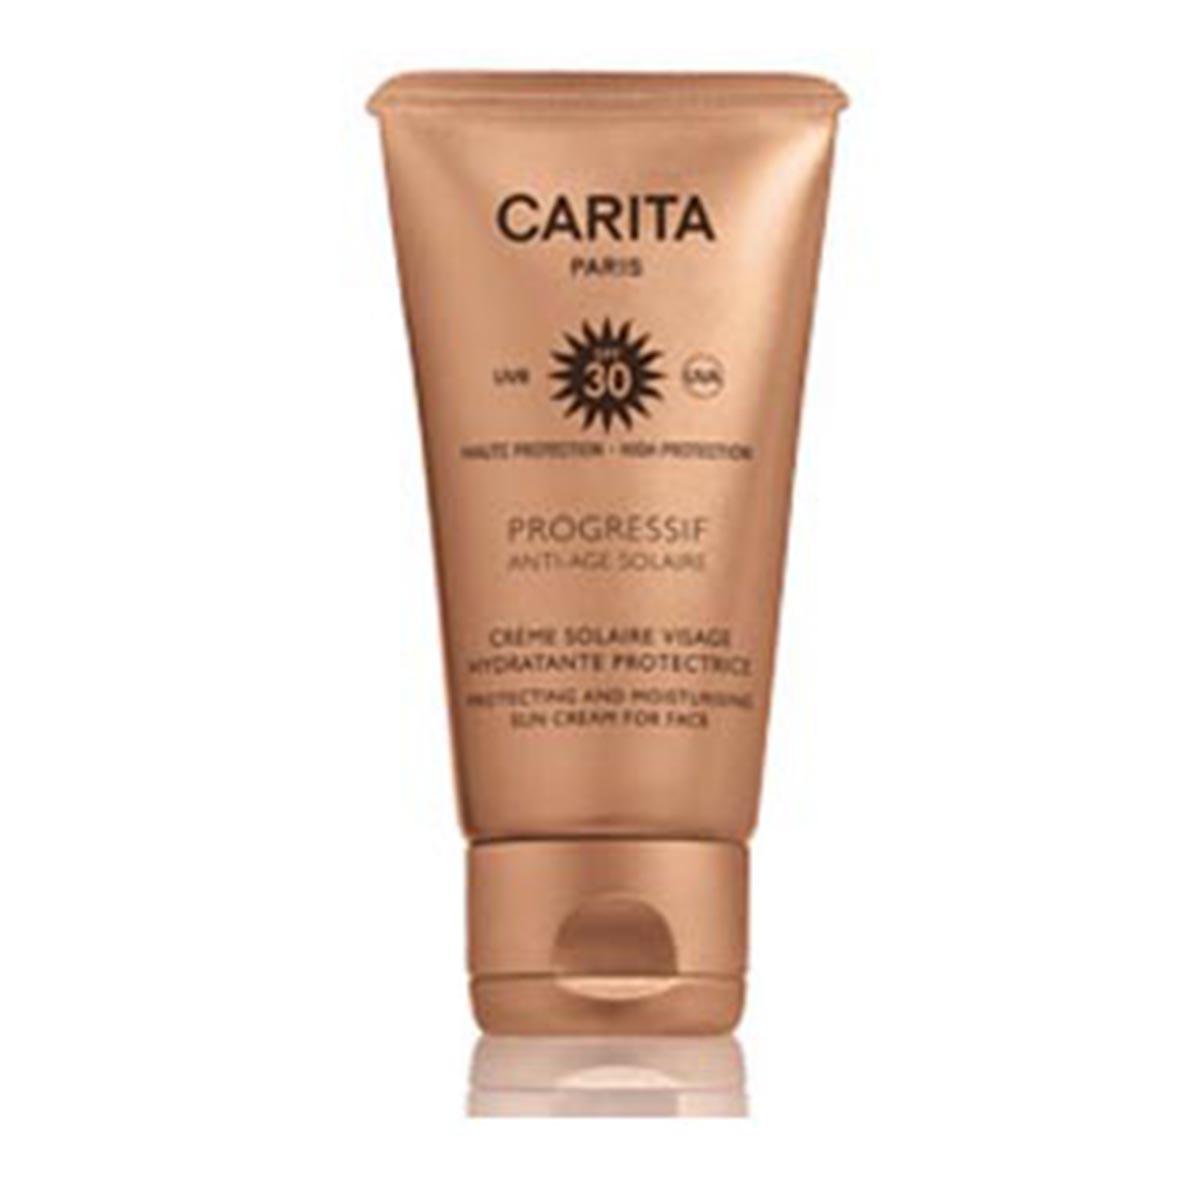 carita-crema-progressif-antiage-solaire-solaire-visage-spf30-50ml